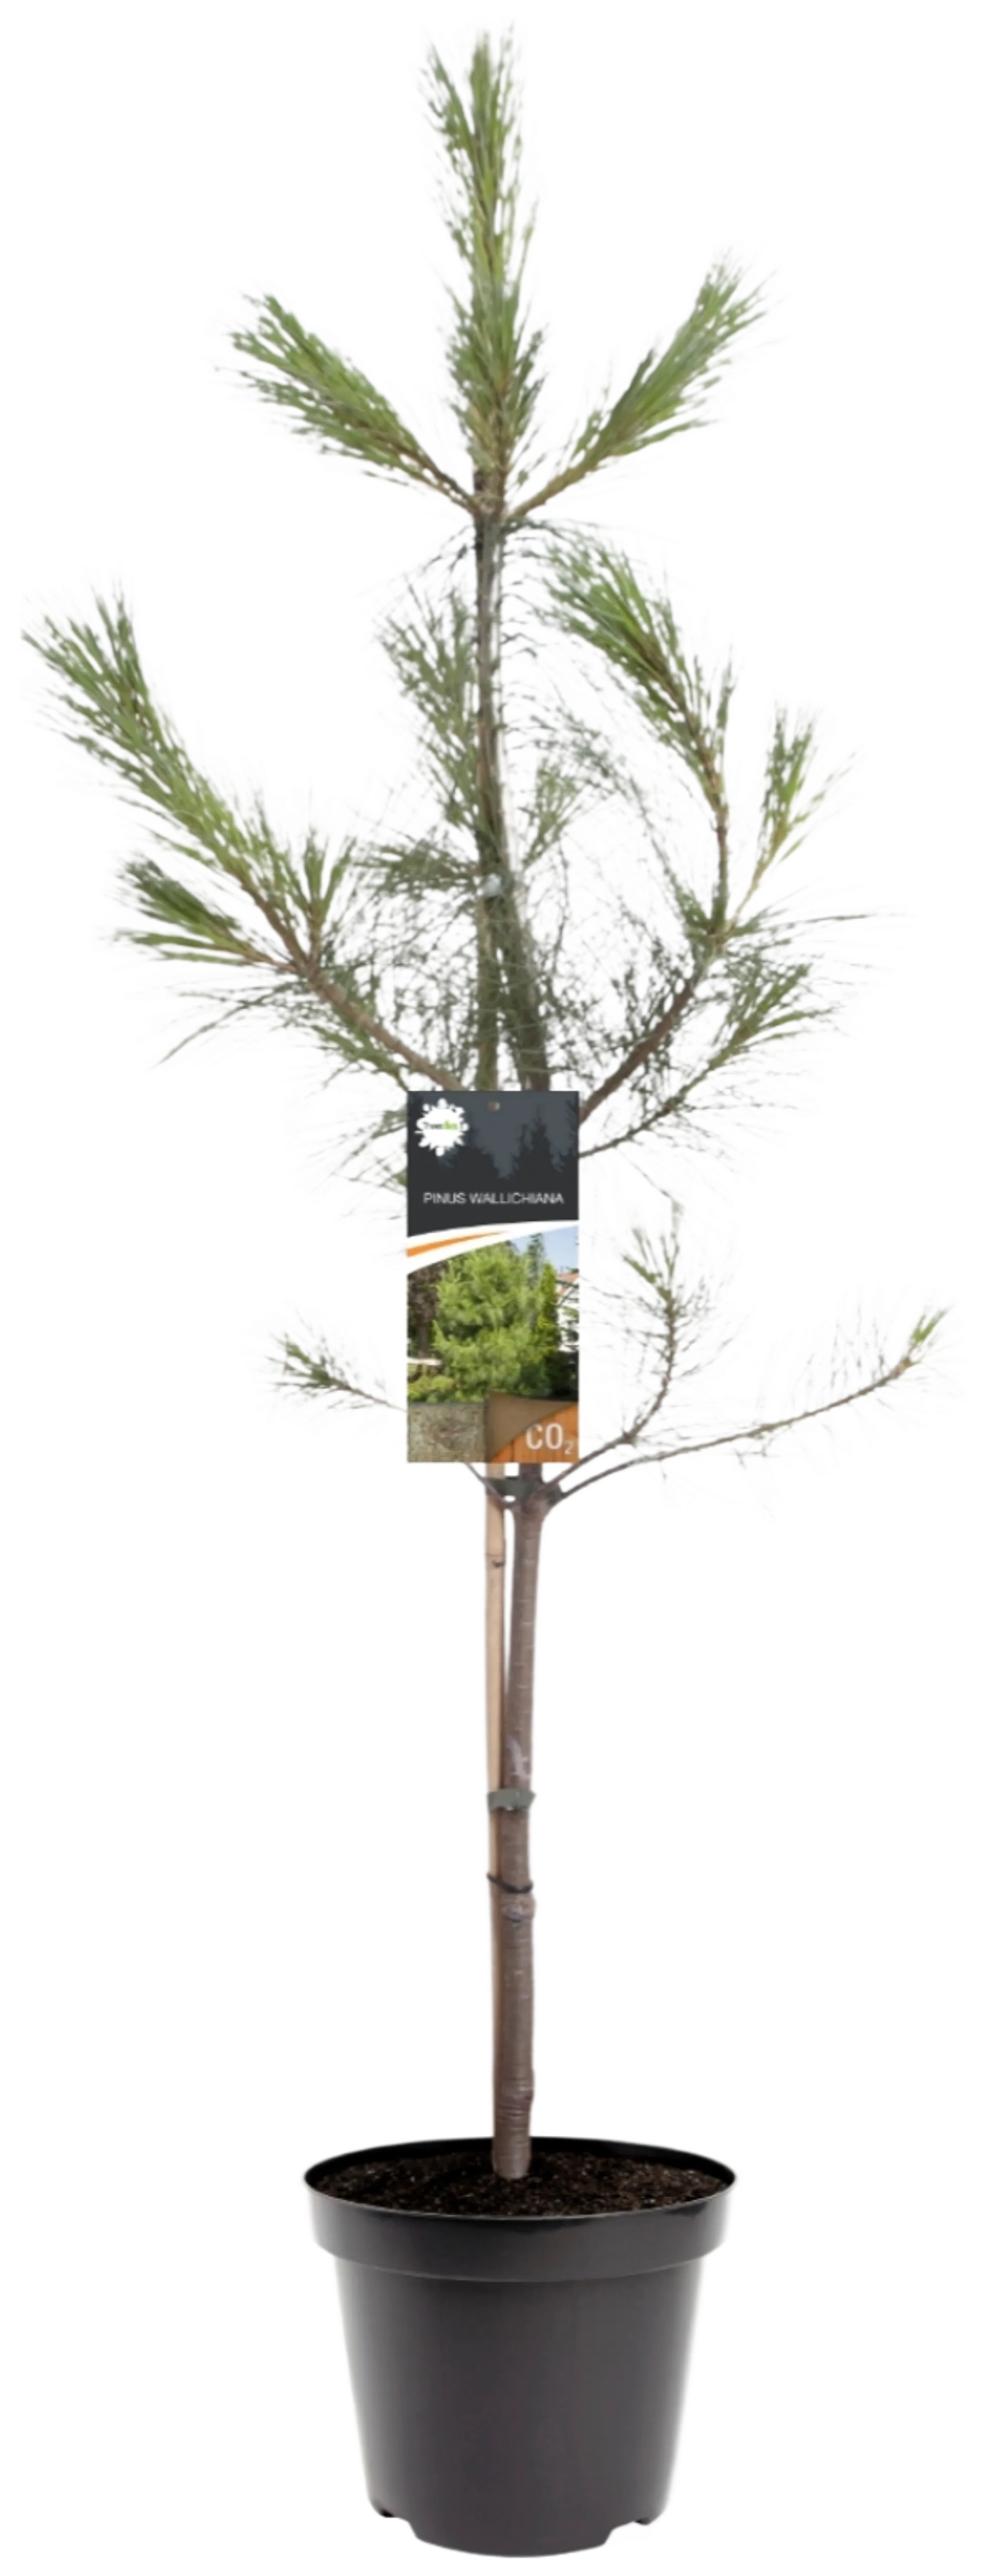 Mänty 'Wallichiana' 80-100 cm astiataimi 7,5 l ruukku Pinus 'Wallichiana'